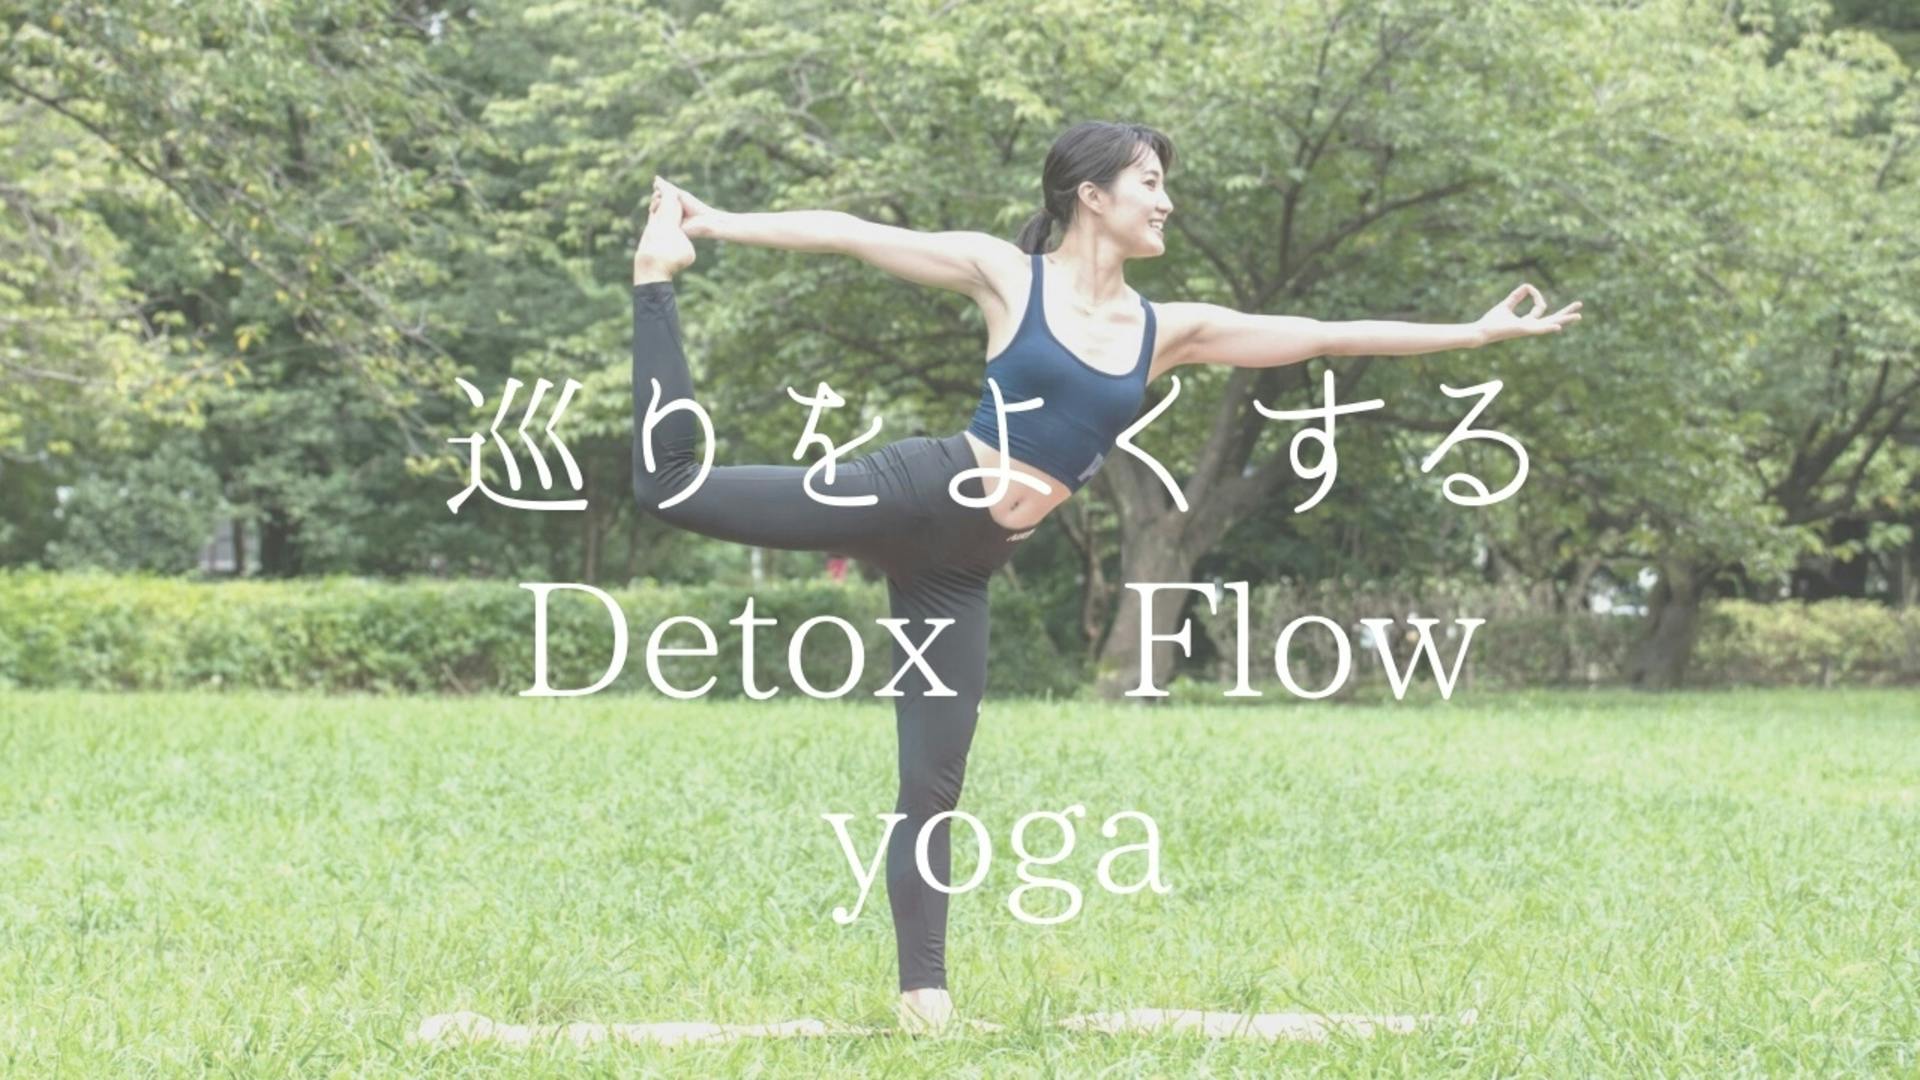 Detox Flow yoga☆彡